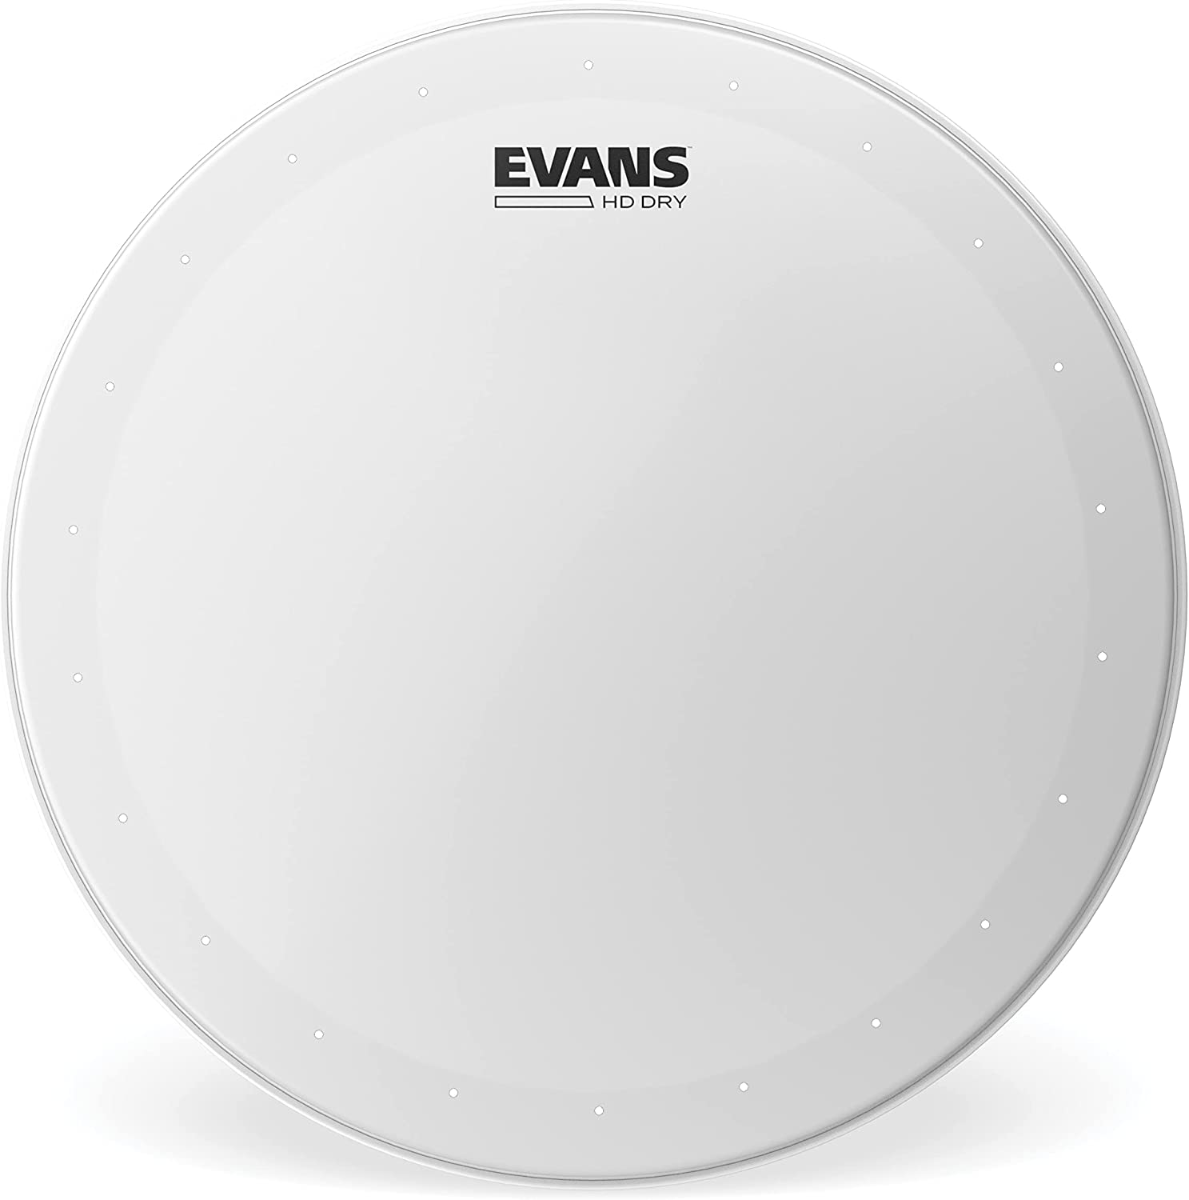 Evans B14HDD HD Dry Snare Drumhead - 14"